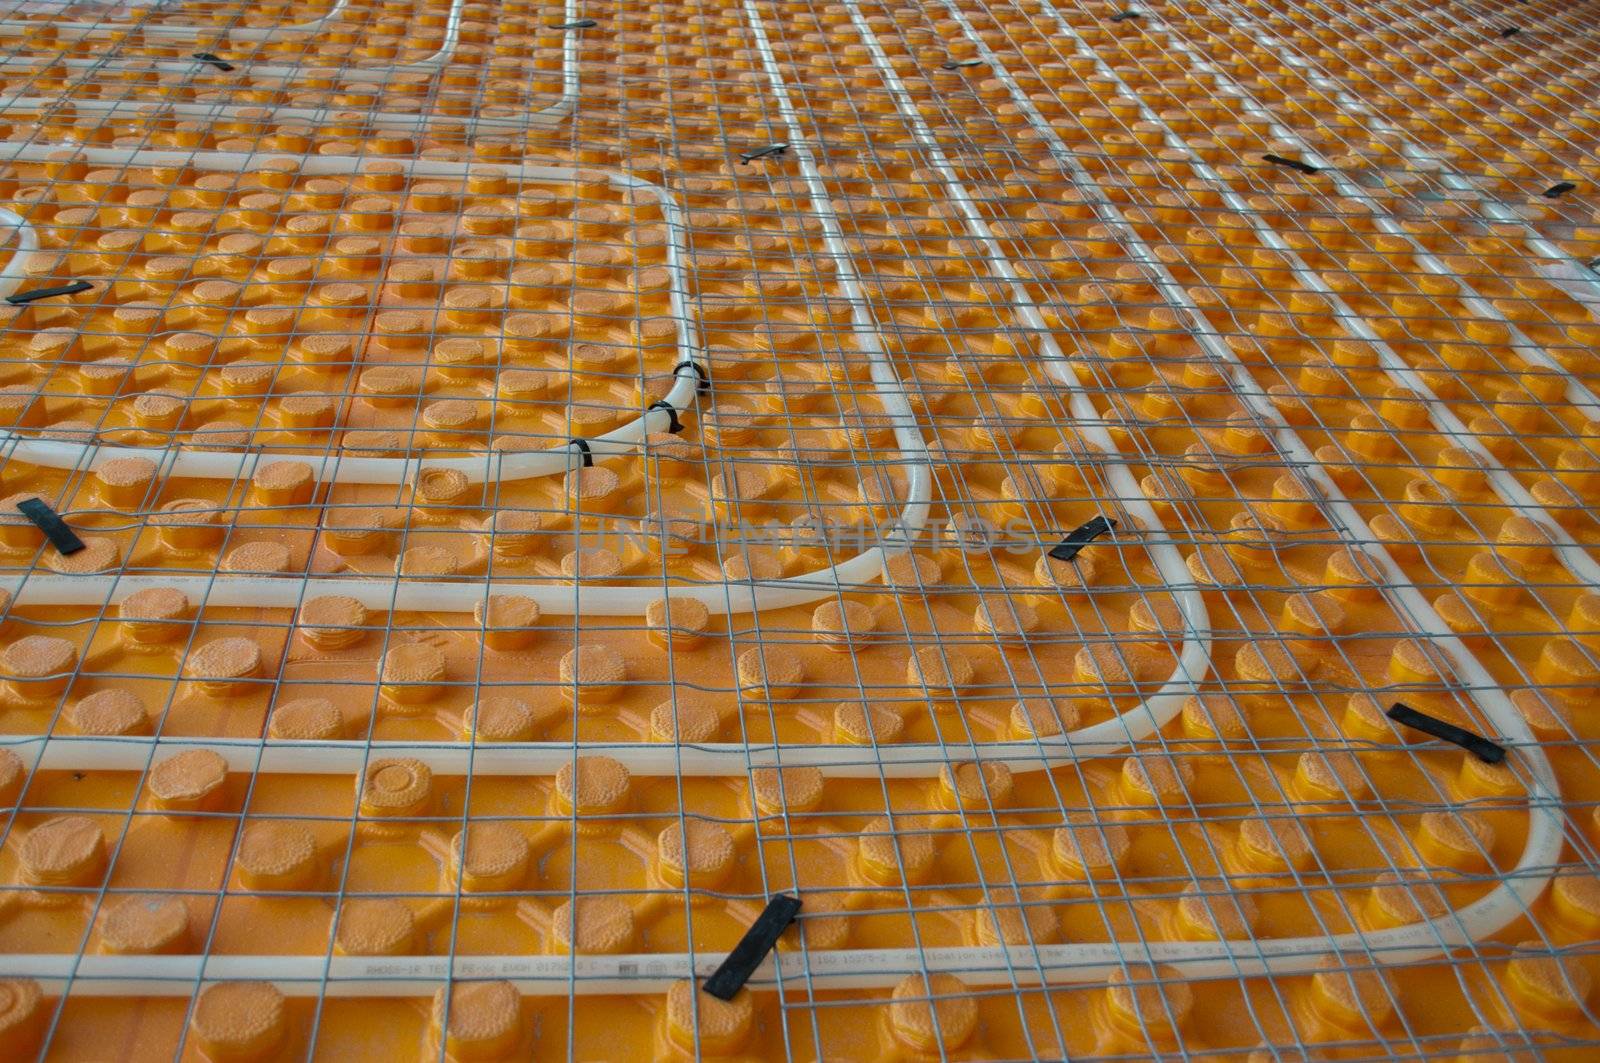 Orange posed Underfloor heating tube in a construction site